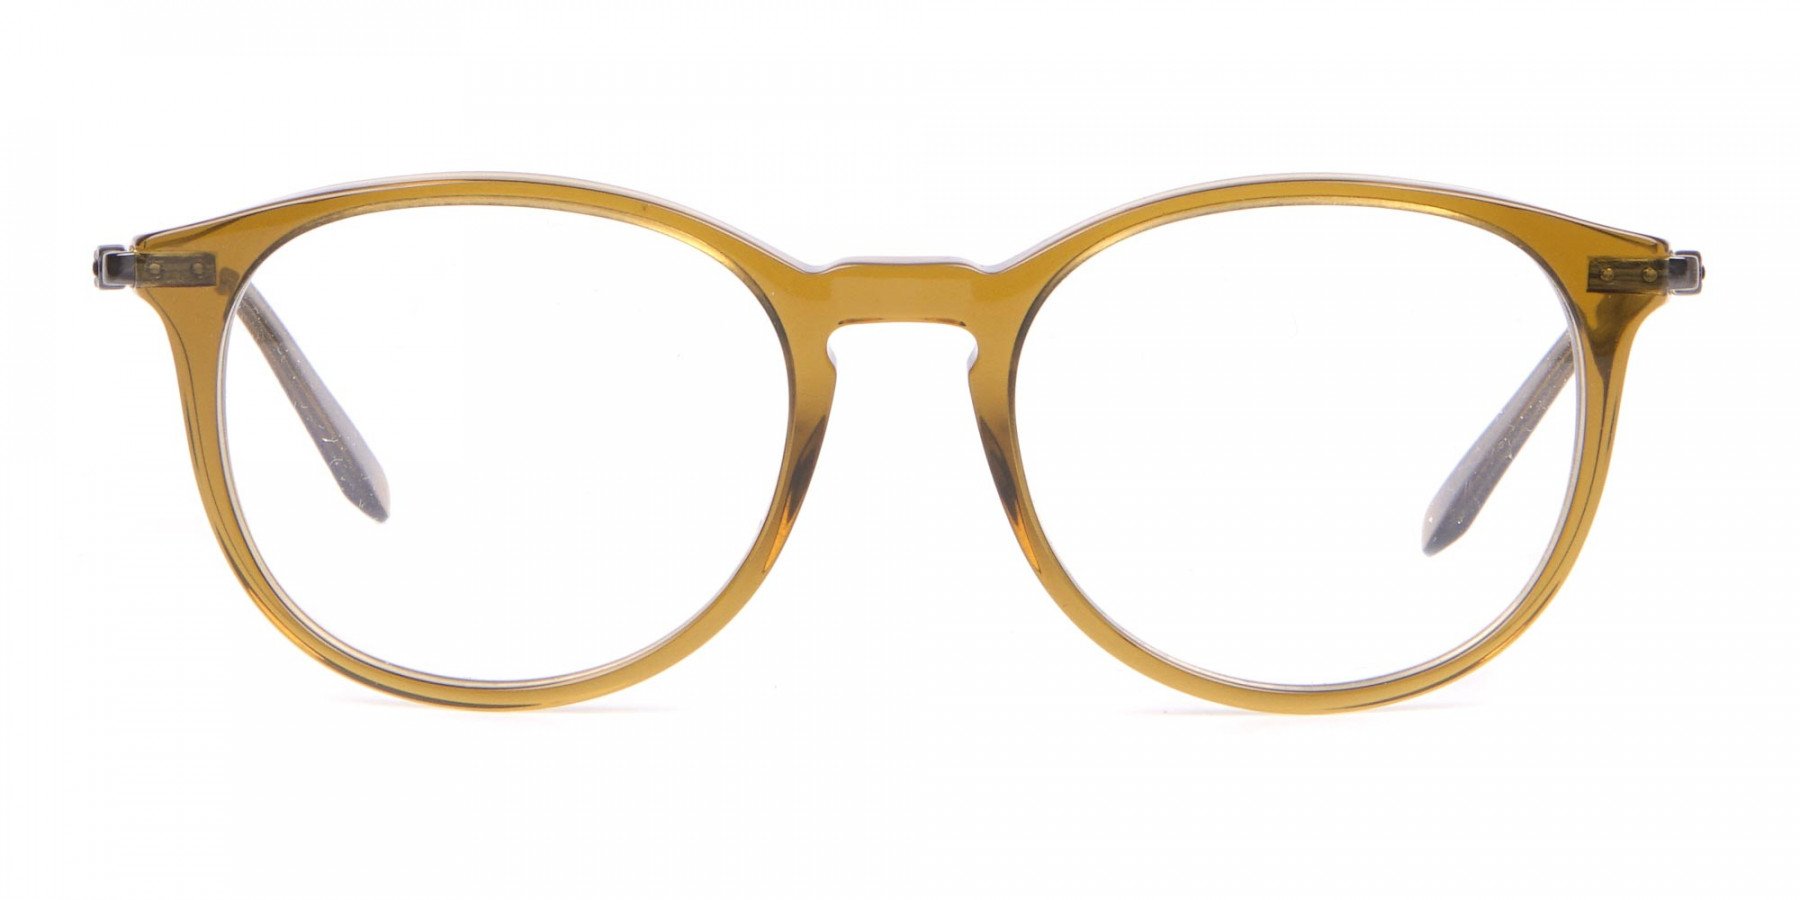 Salvatore Ferragamo SF2123 Retro Round Glasses Khaki-1